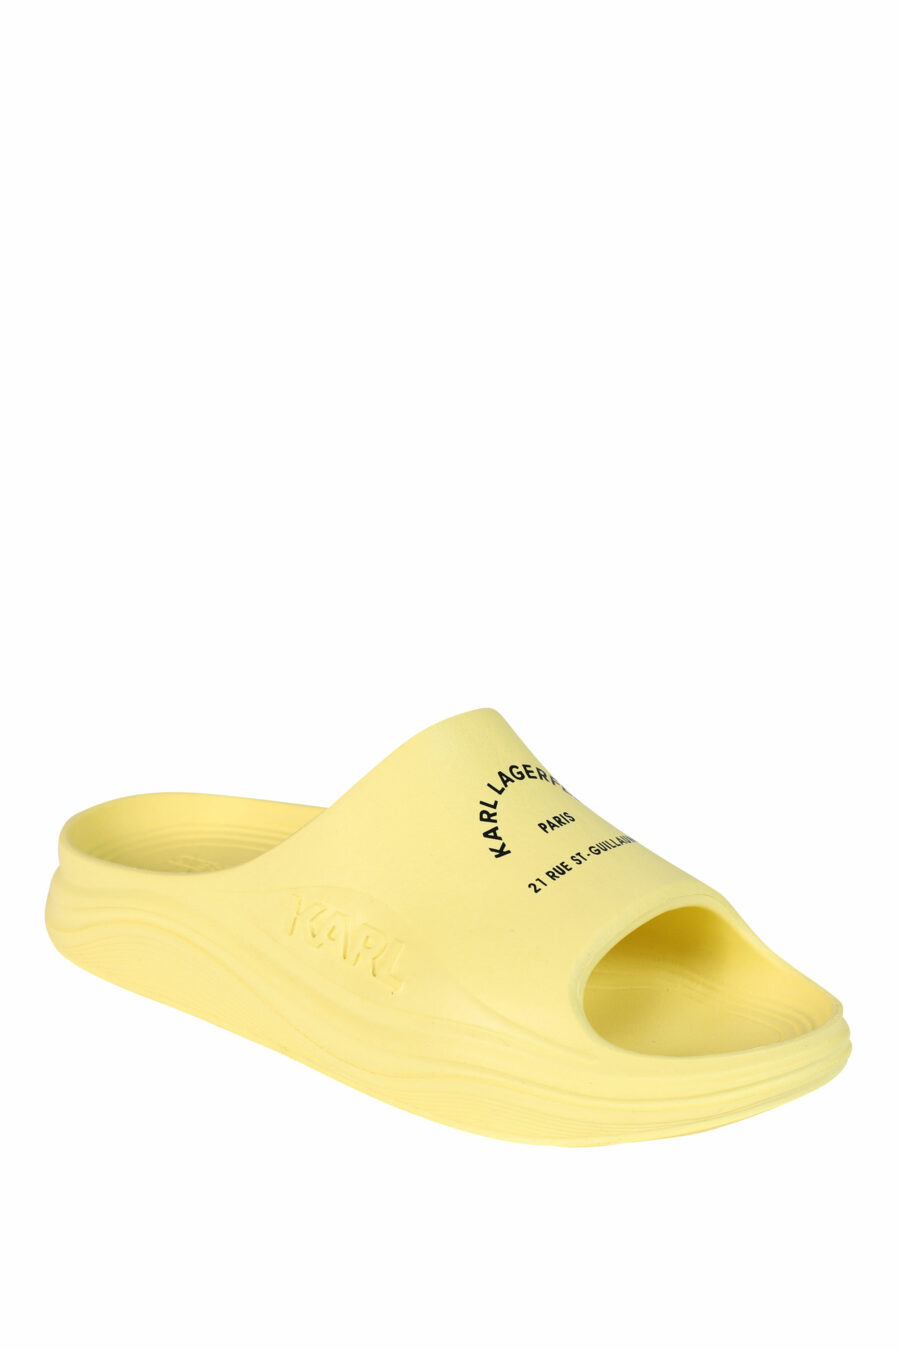 Sandalias amarillas "skoona" con logo - 5059529246012 2